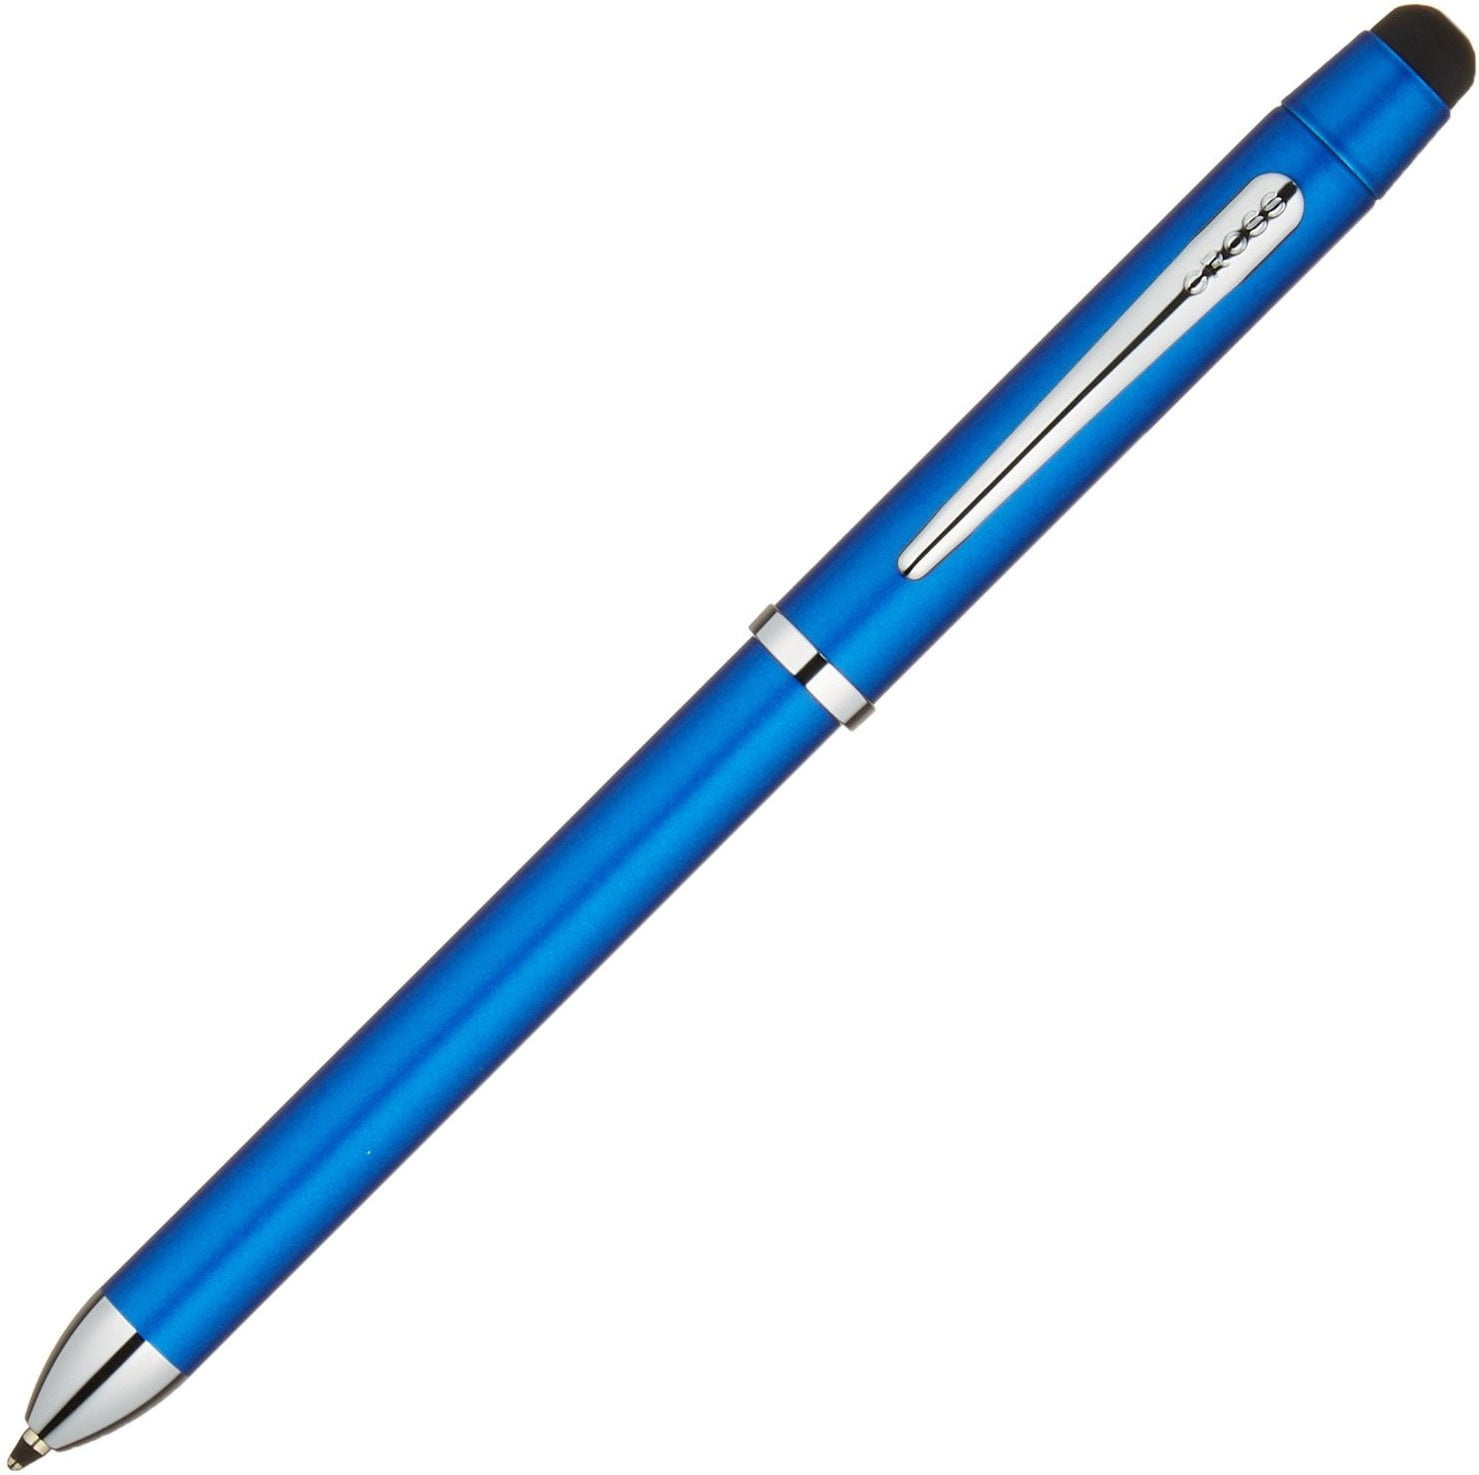 Schijn Armstrong binnenkomst Cross Tech3+ Blue Multifunction Pen with Chrome Plated Appointments -  Walmart.com